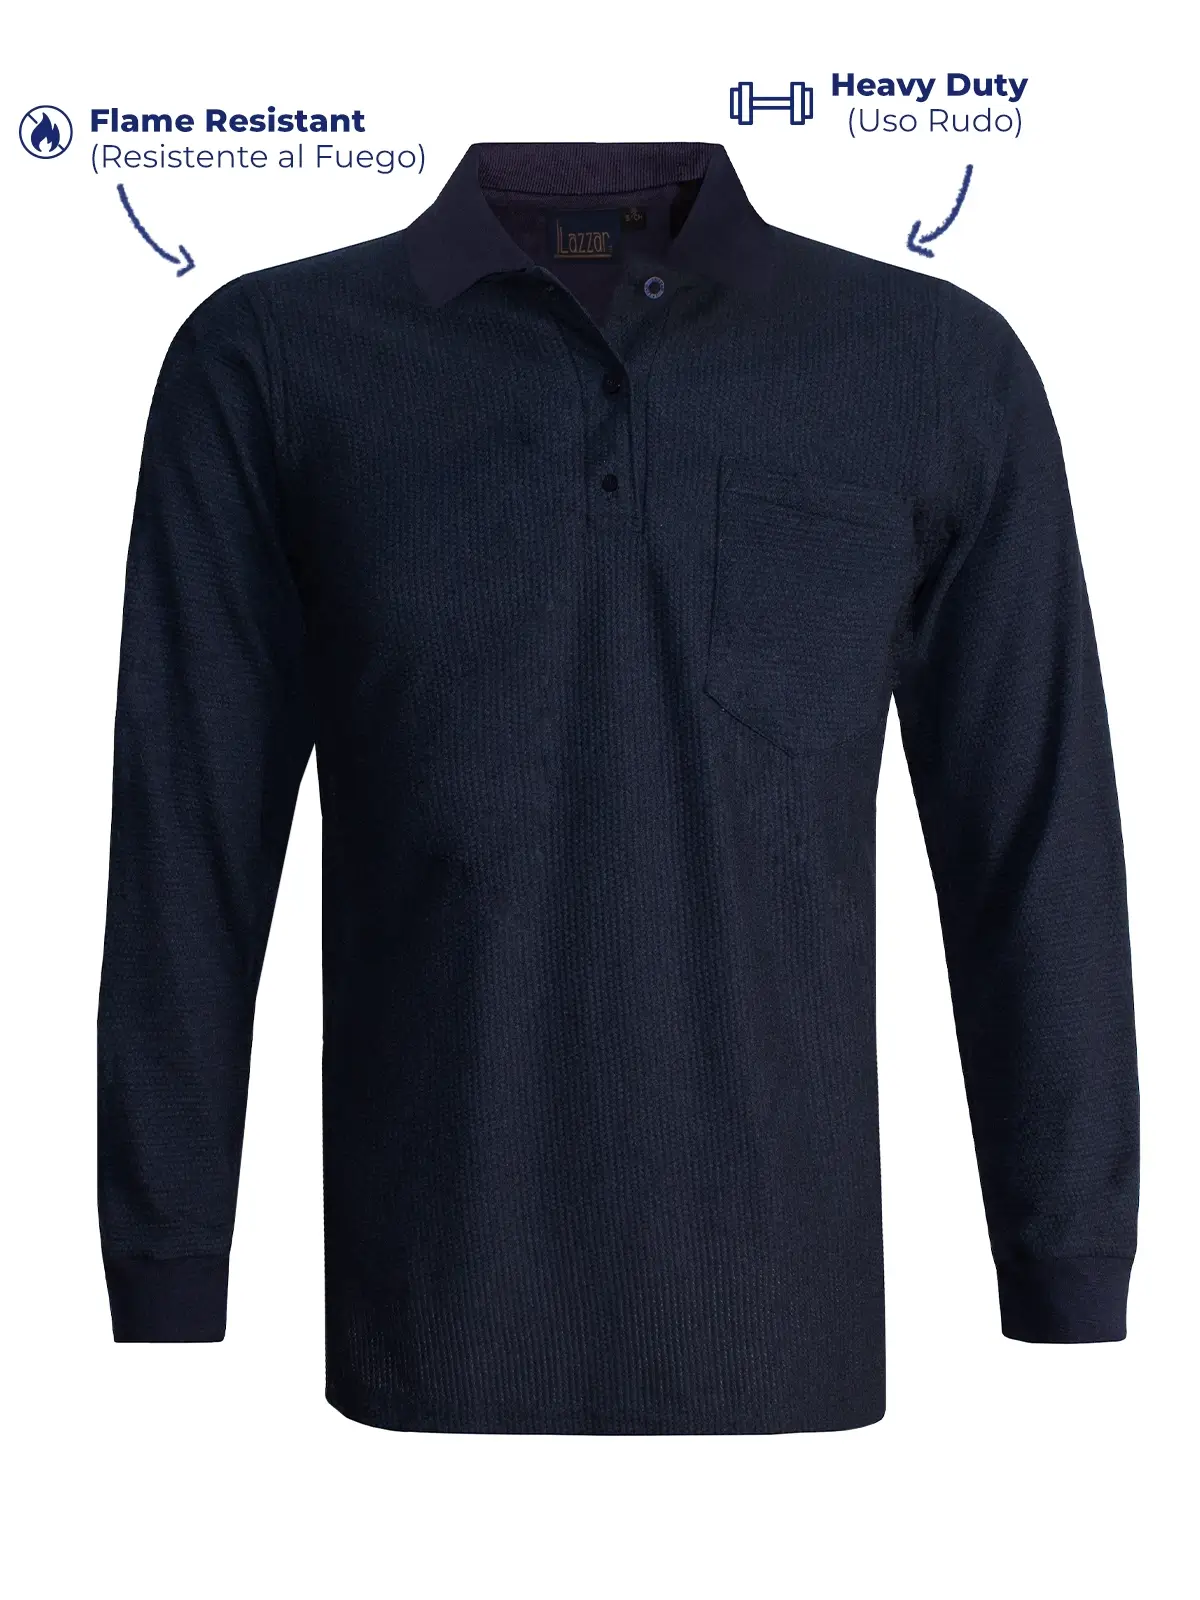 Flame retardant polo shirt navy blue color